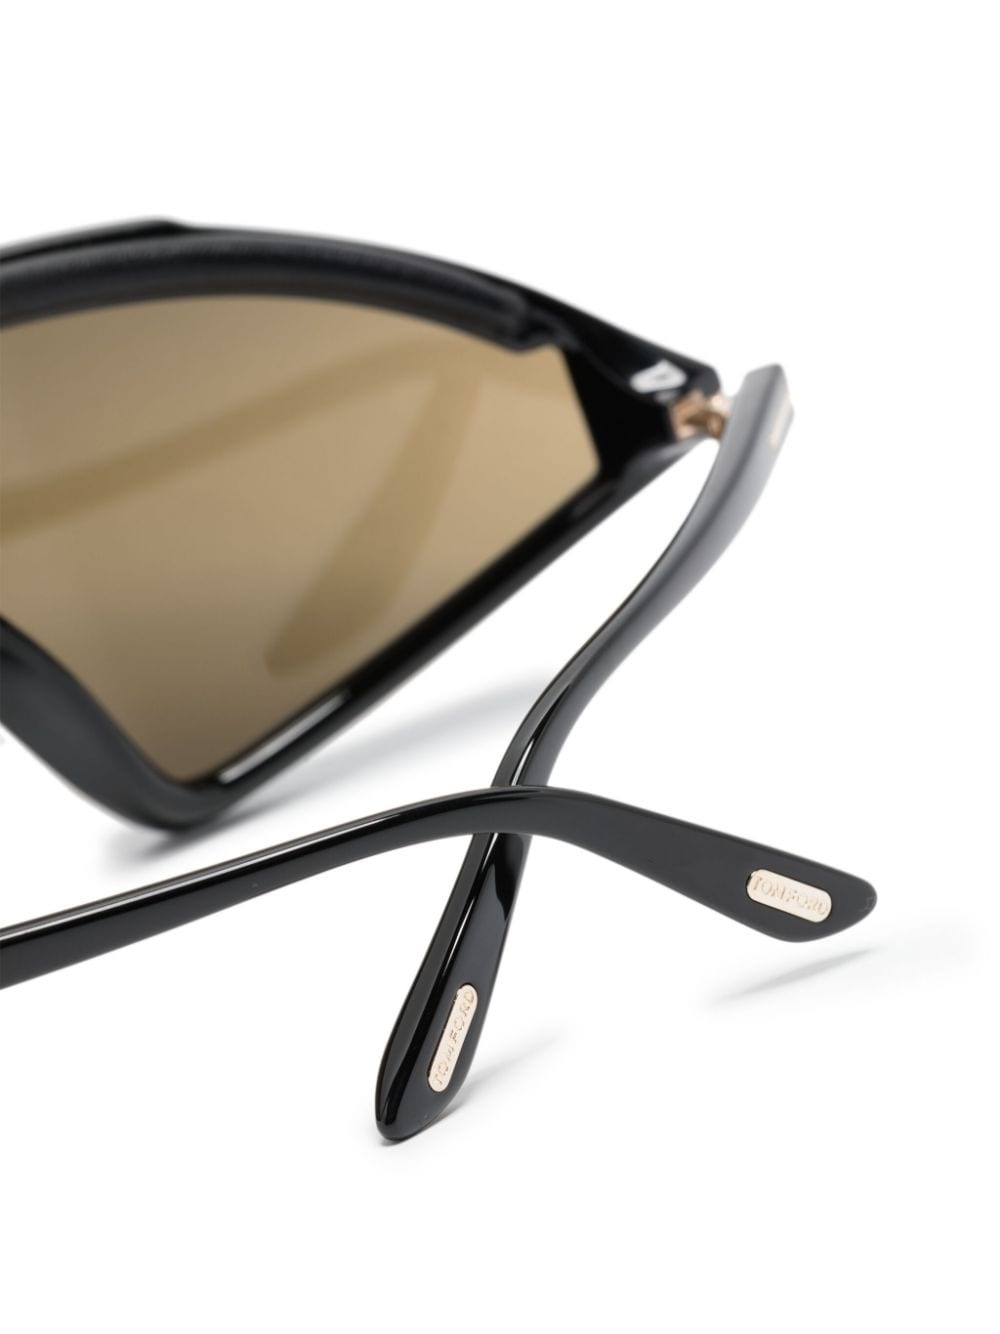 Lorna shield-frame sunglasses - 3